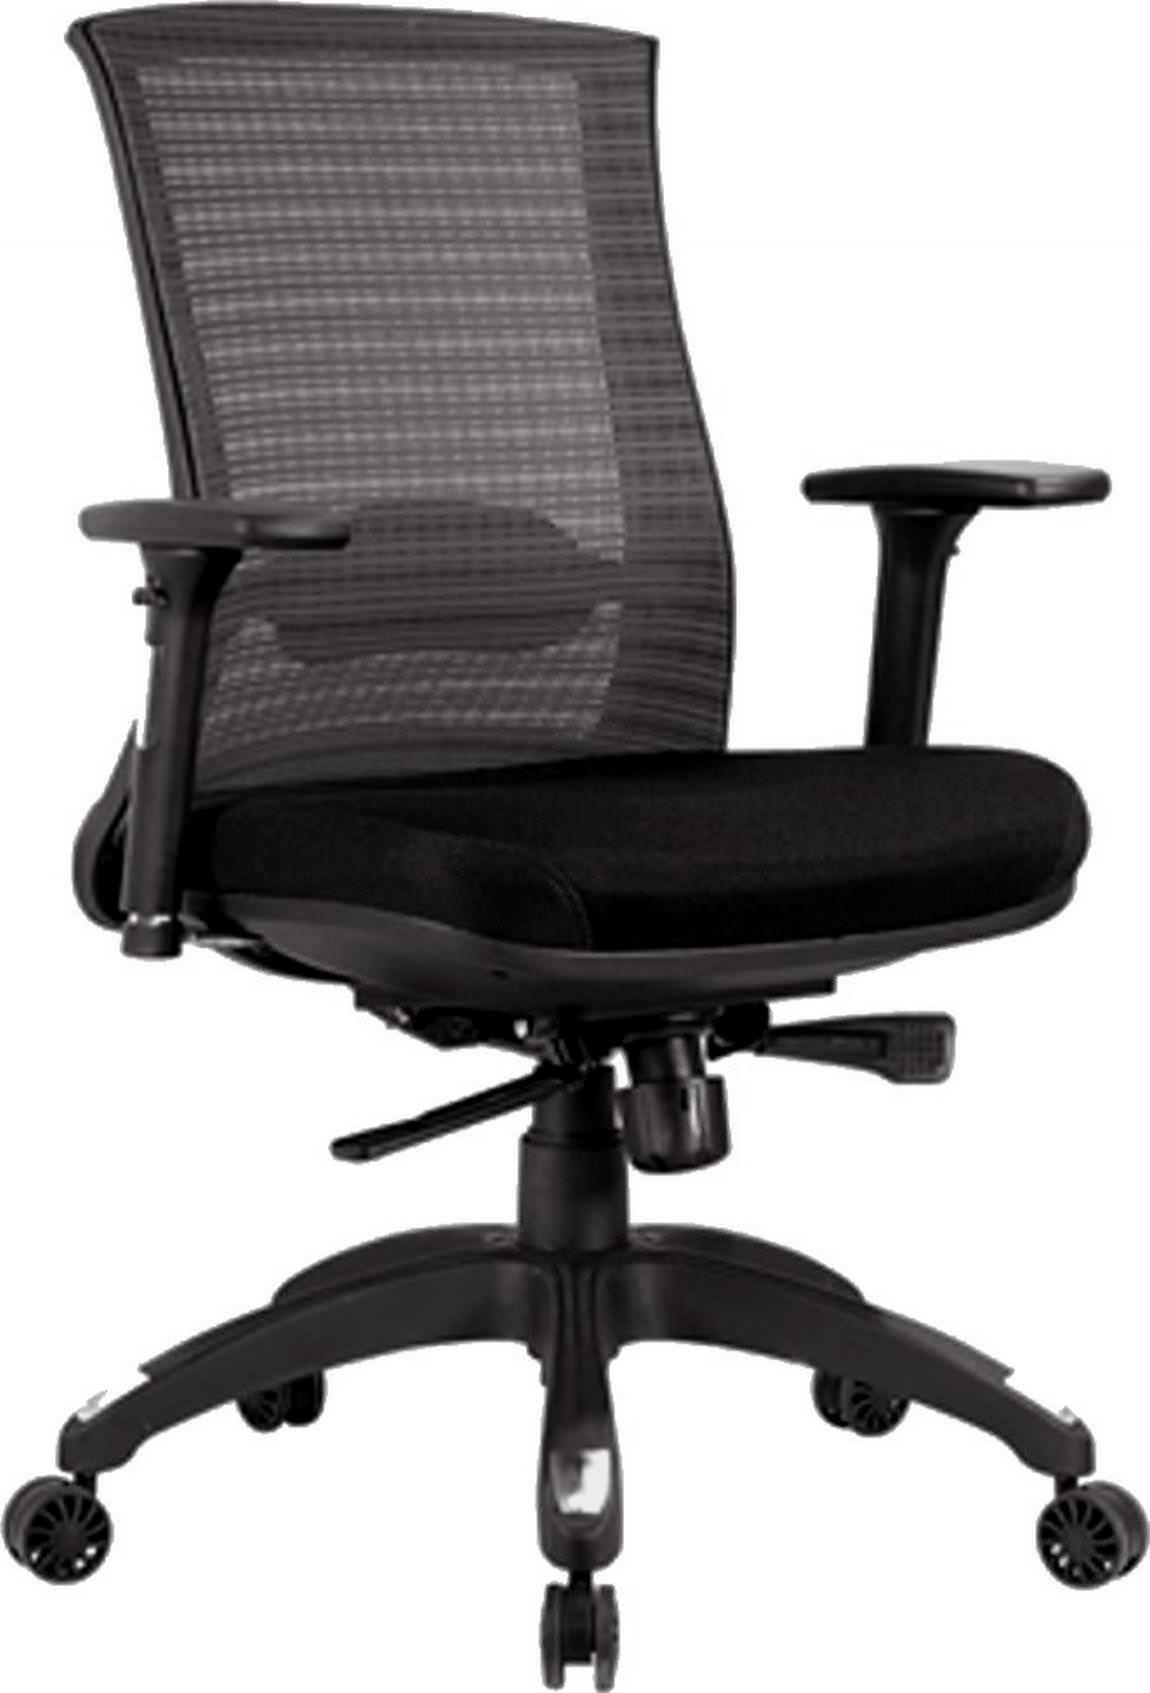 https://madisonliquidators.com/images/p/1150/868-multi-adjustable-mesh-back-chair-with-lumbar-support-and-foam-seat-1.jpg